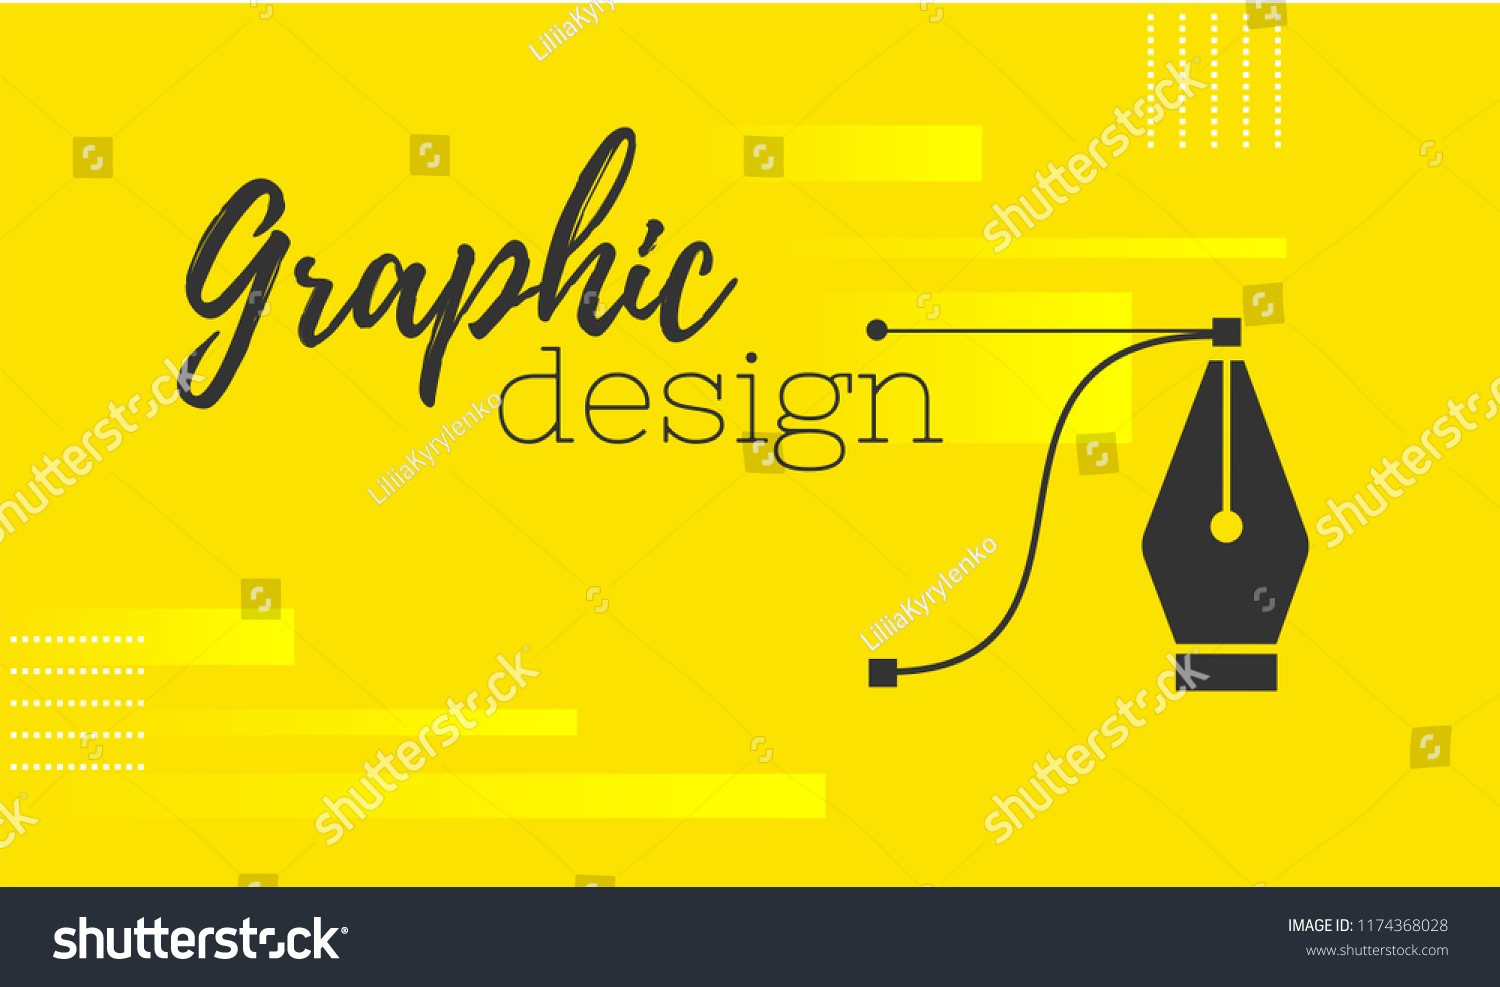 SVG of Graphic design. Pen tool cursor. Vector computer graphics. banner for designer or illustrator. The curve control points. svg